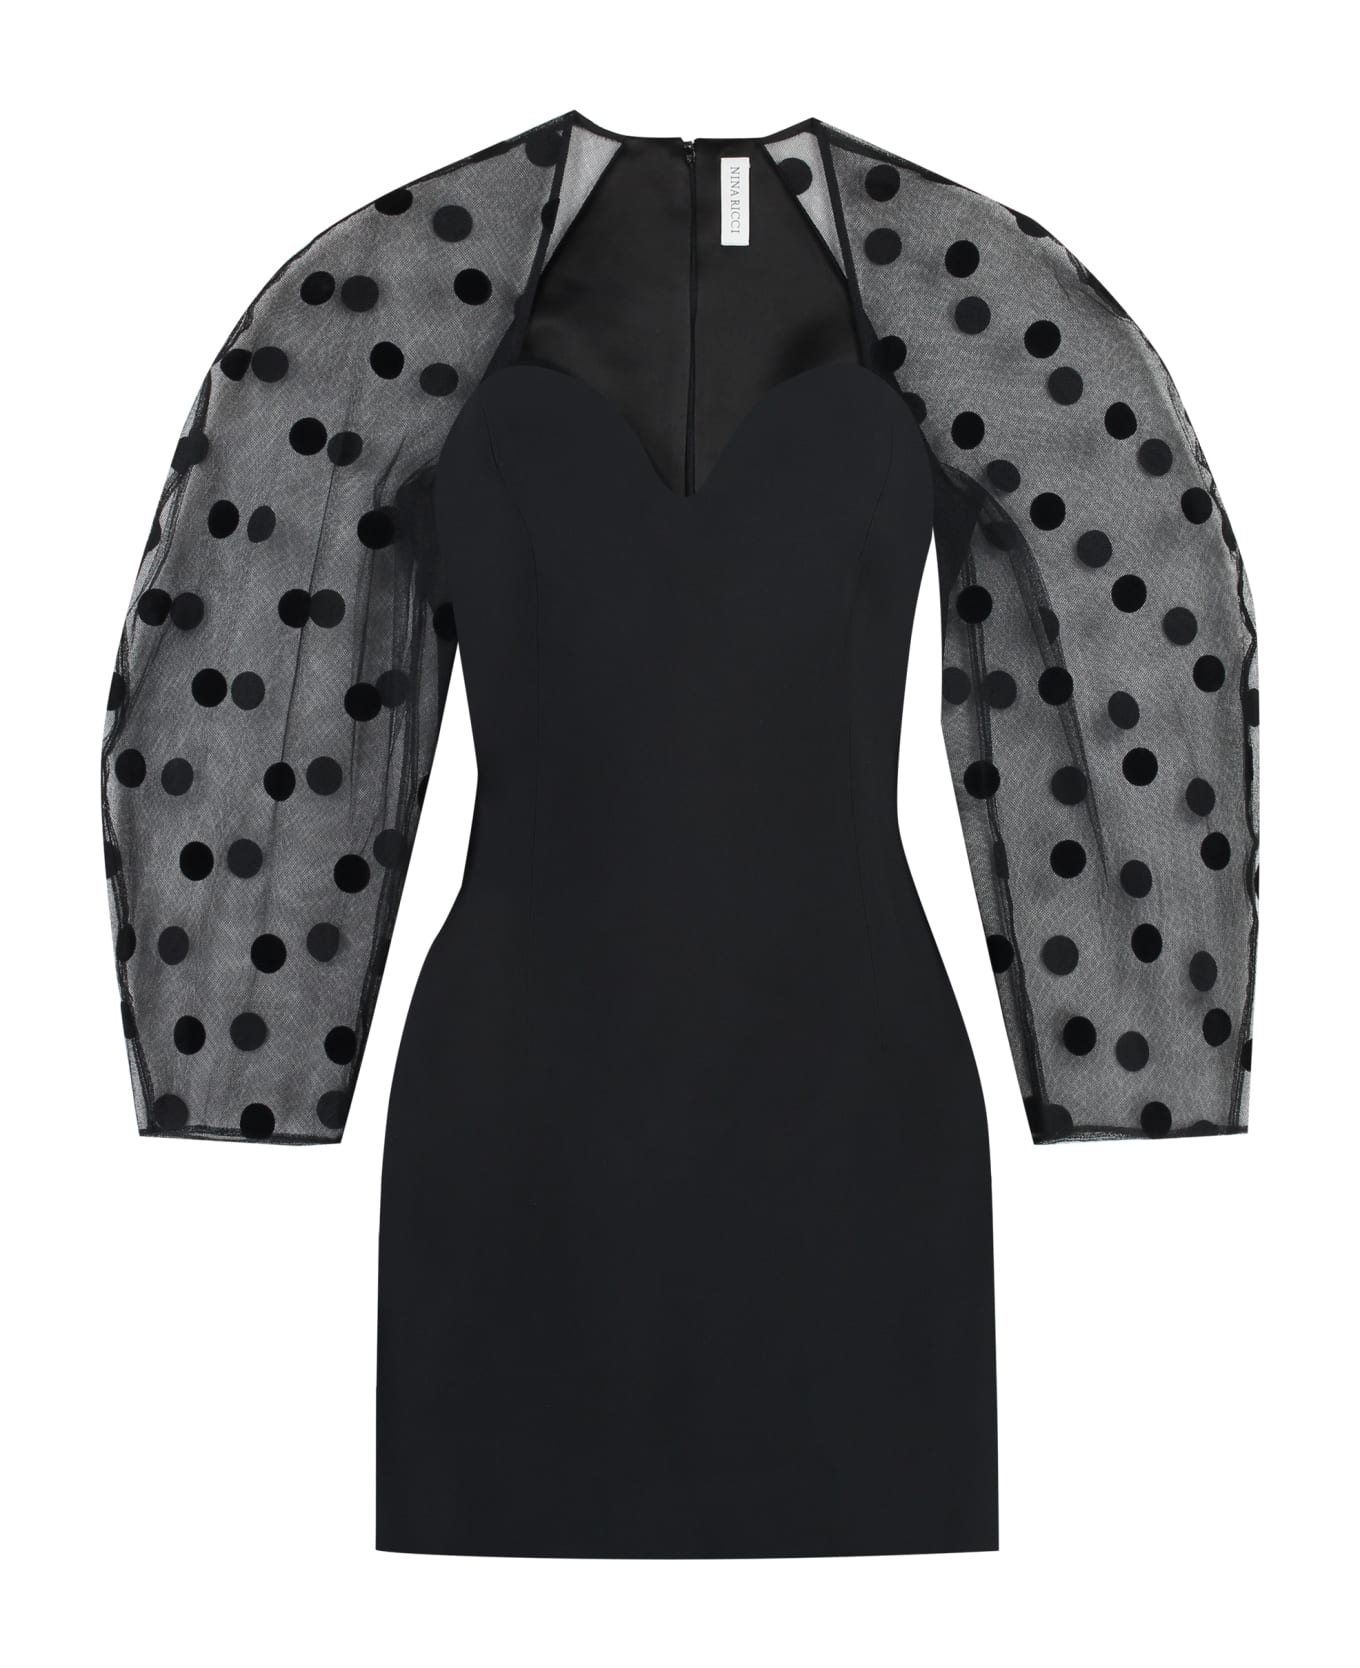 Nina Ricci Puffed Sleeve Dress - black